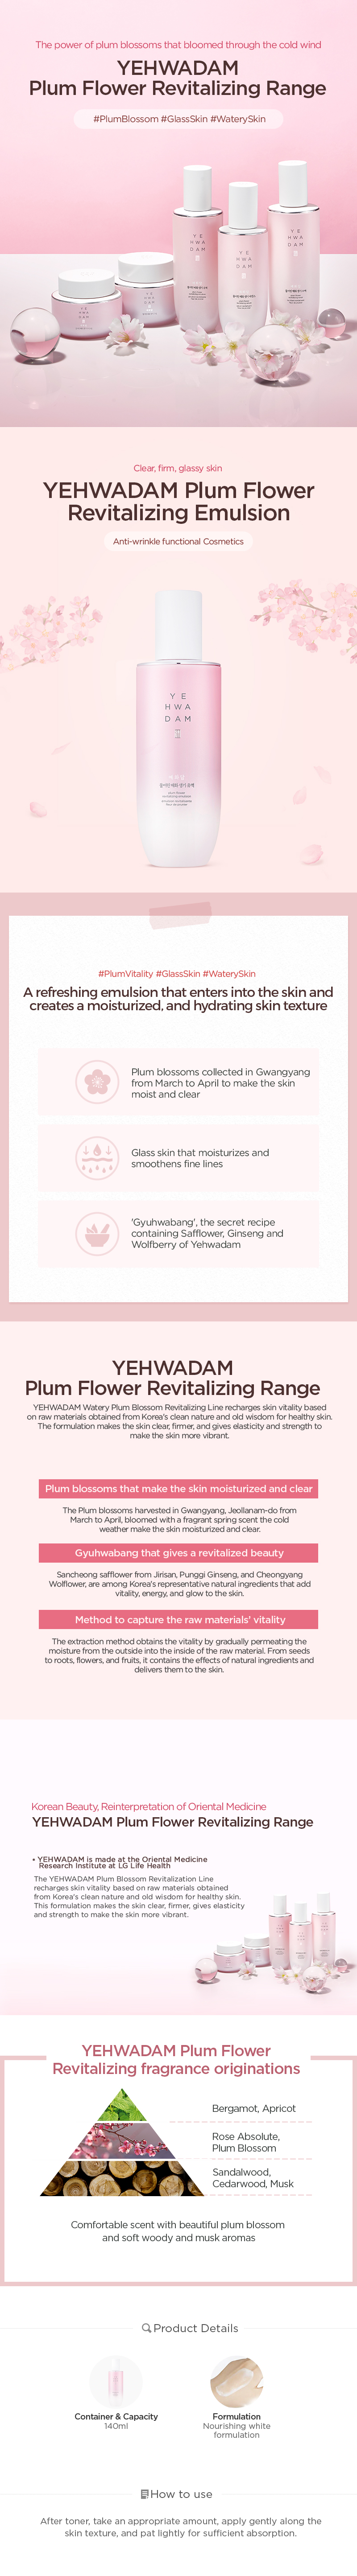 Yehwadam Plum Flower Revitalizing Emulsion